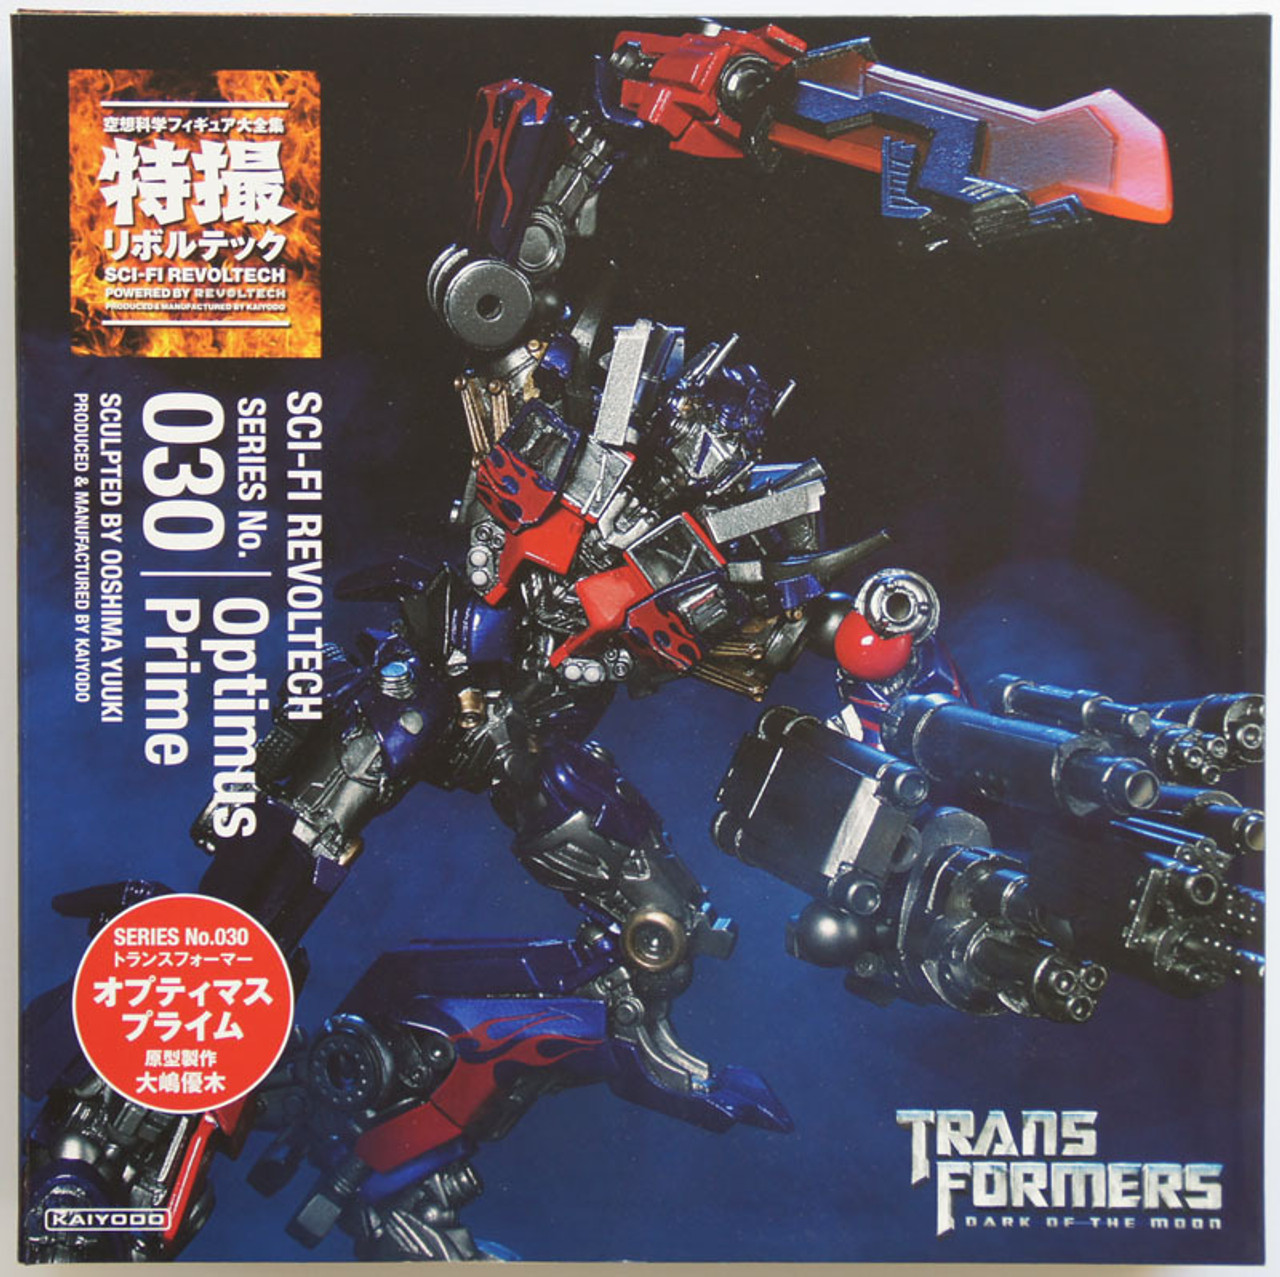 Kaiyodo Sci-Fi Revoltech 030 Transformers Optimus Prime Figure